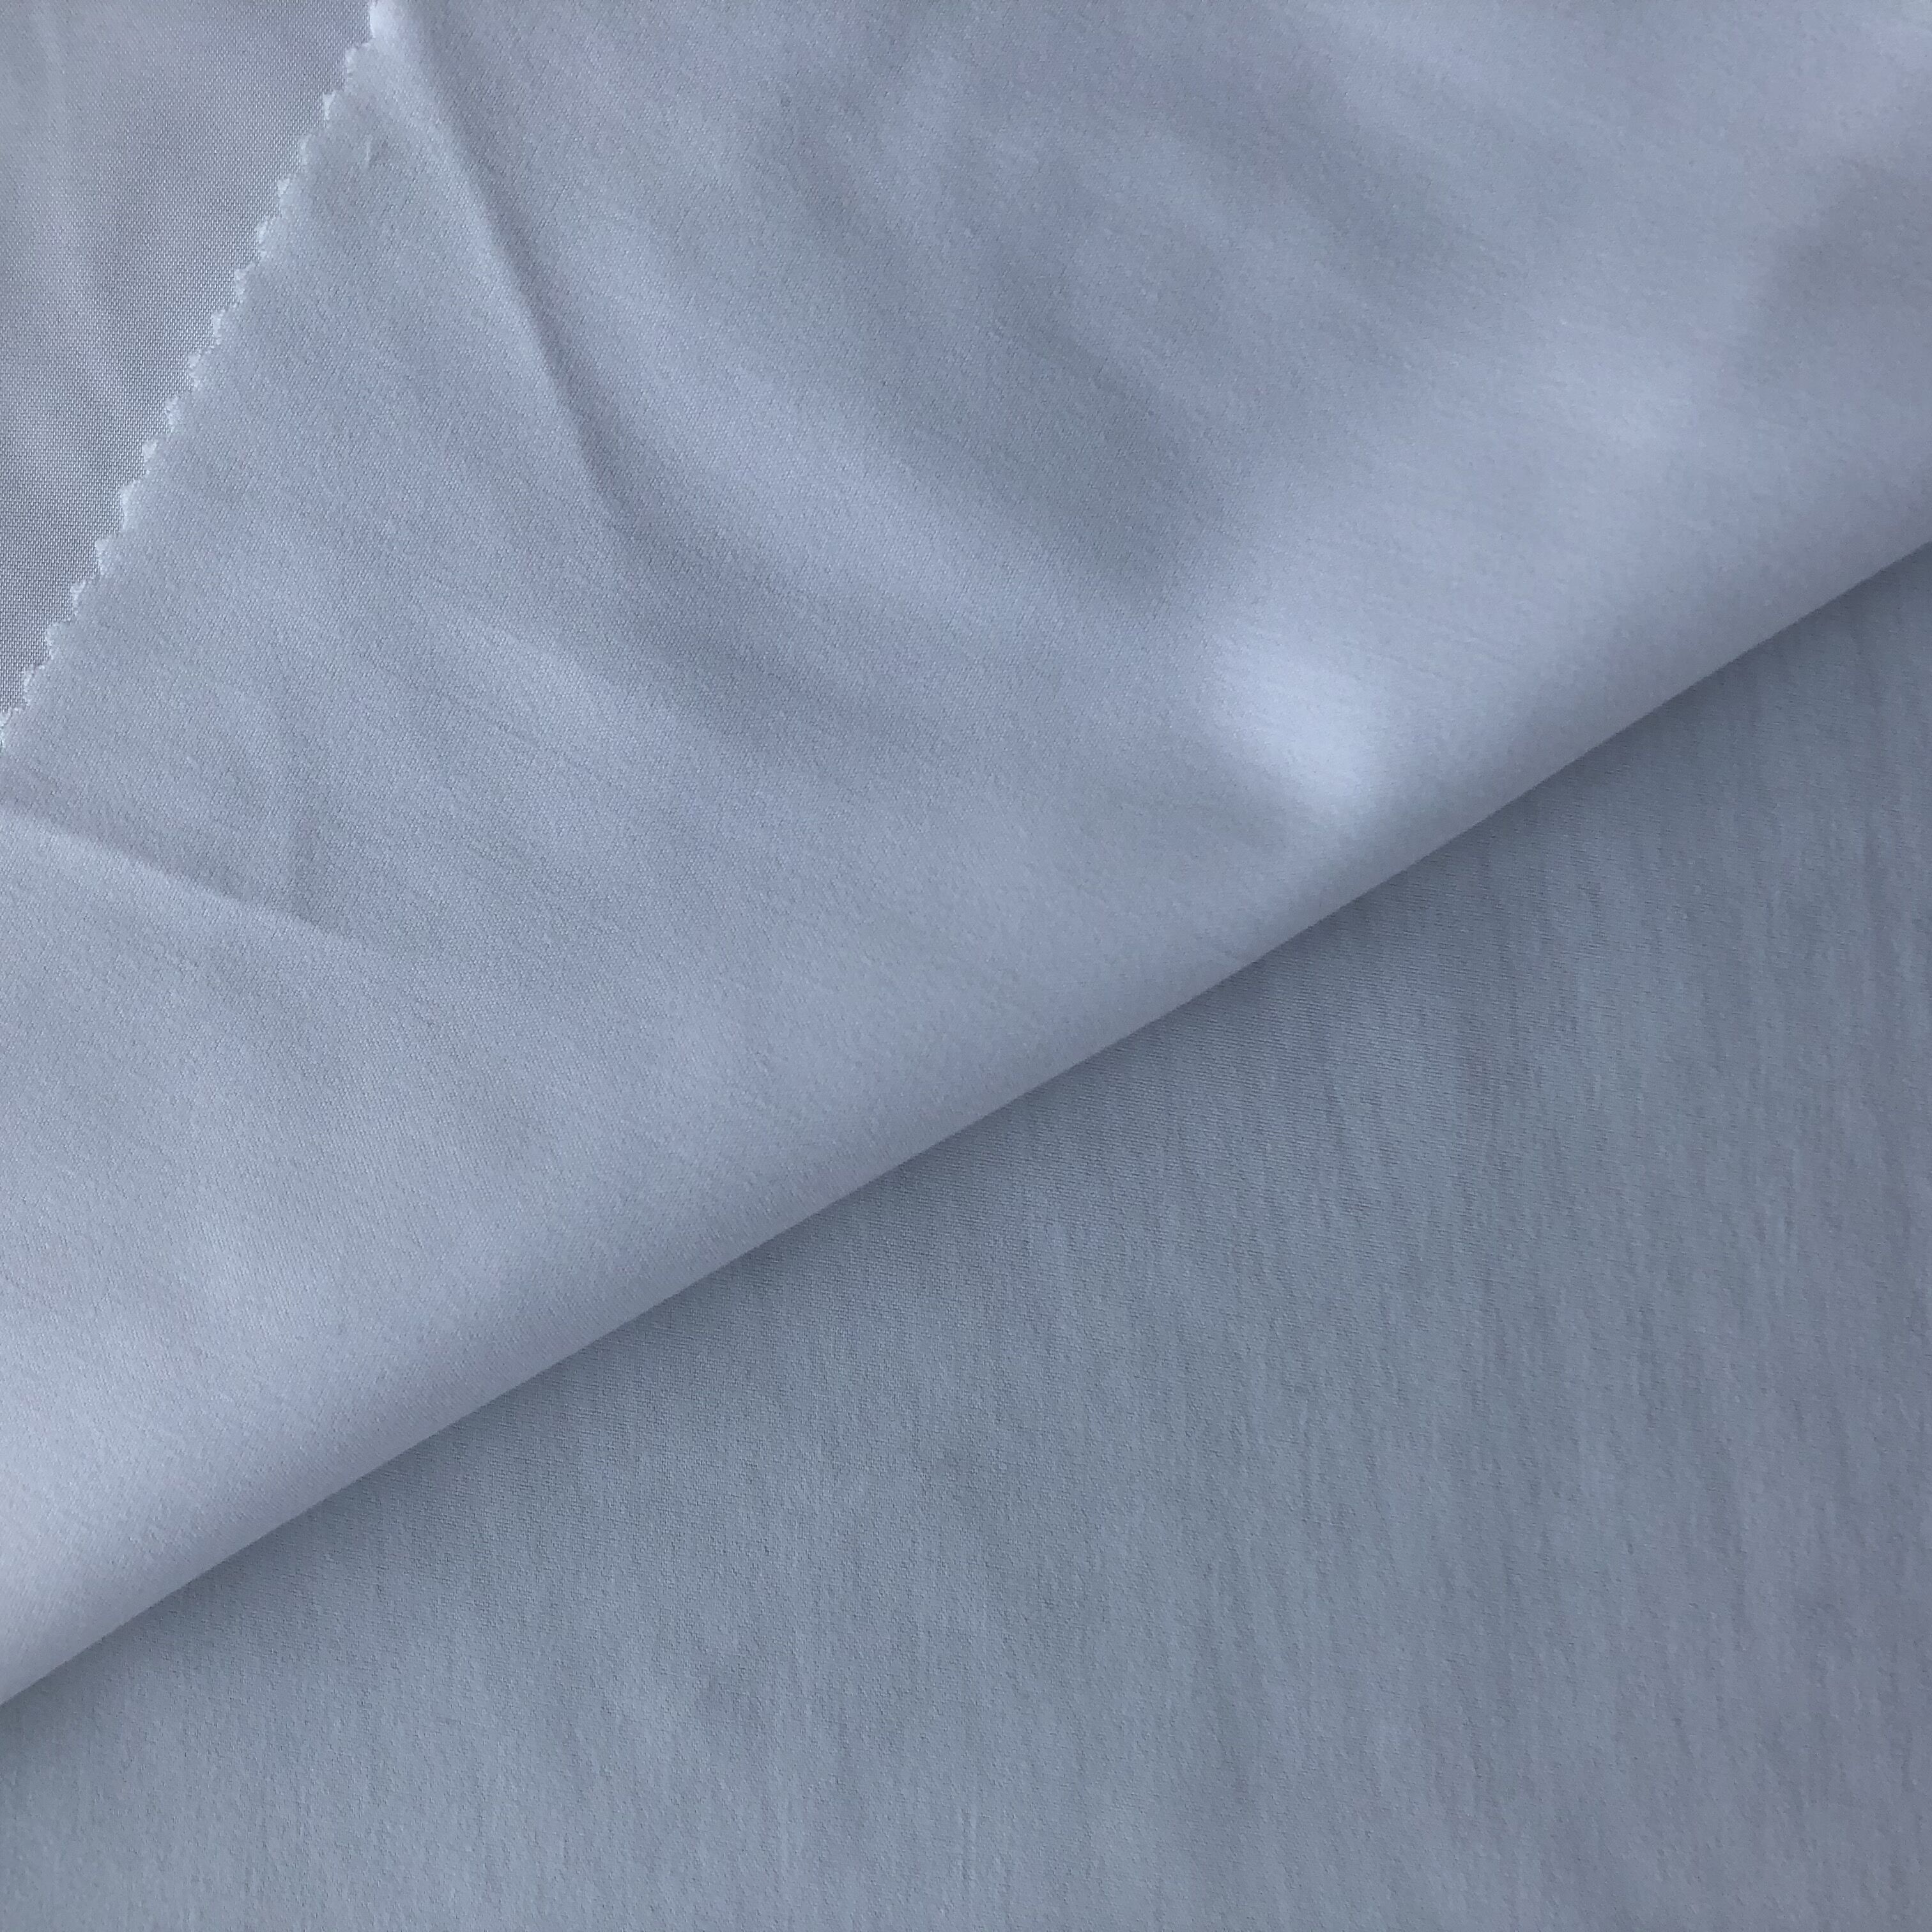 100%polyester Microfiber Antibacterial Fabric 